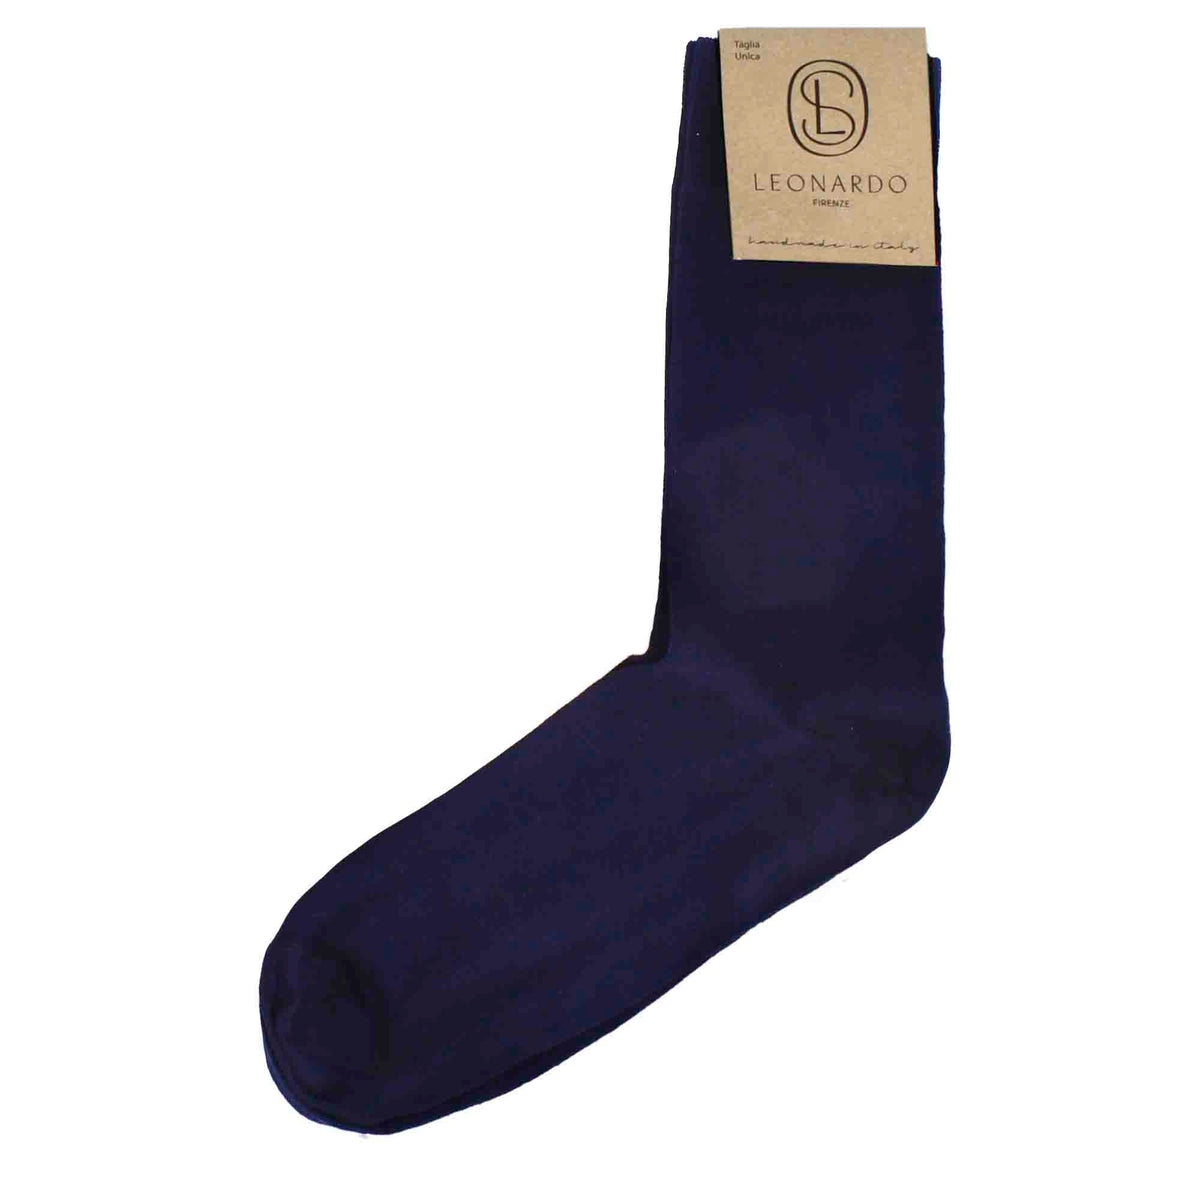 Men's plain cotton blue socks